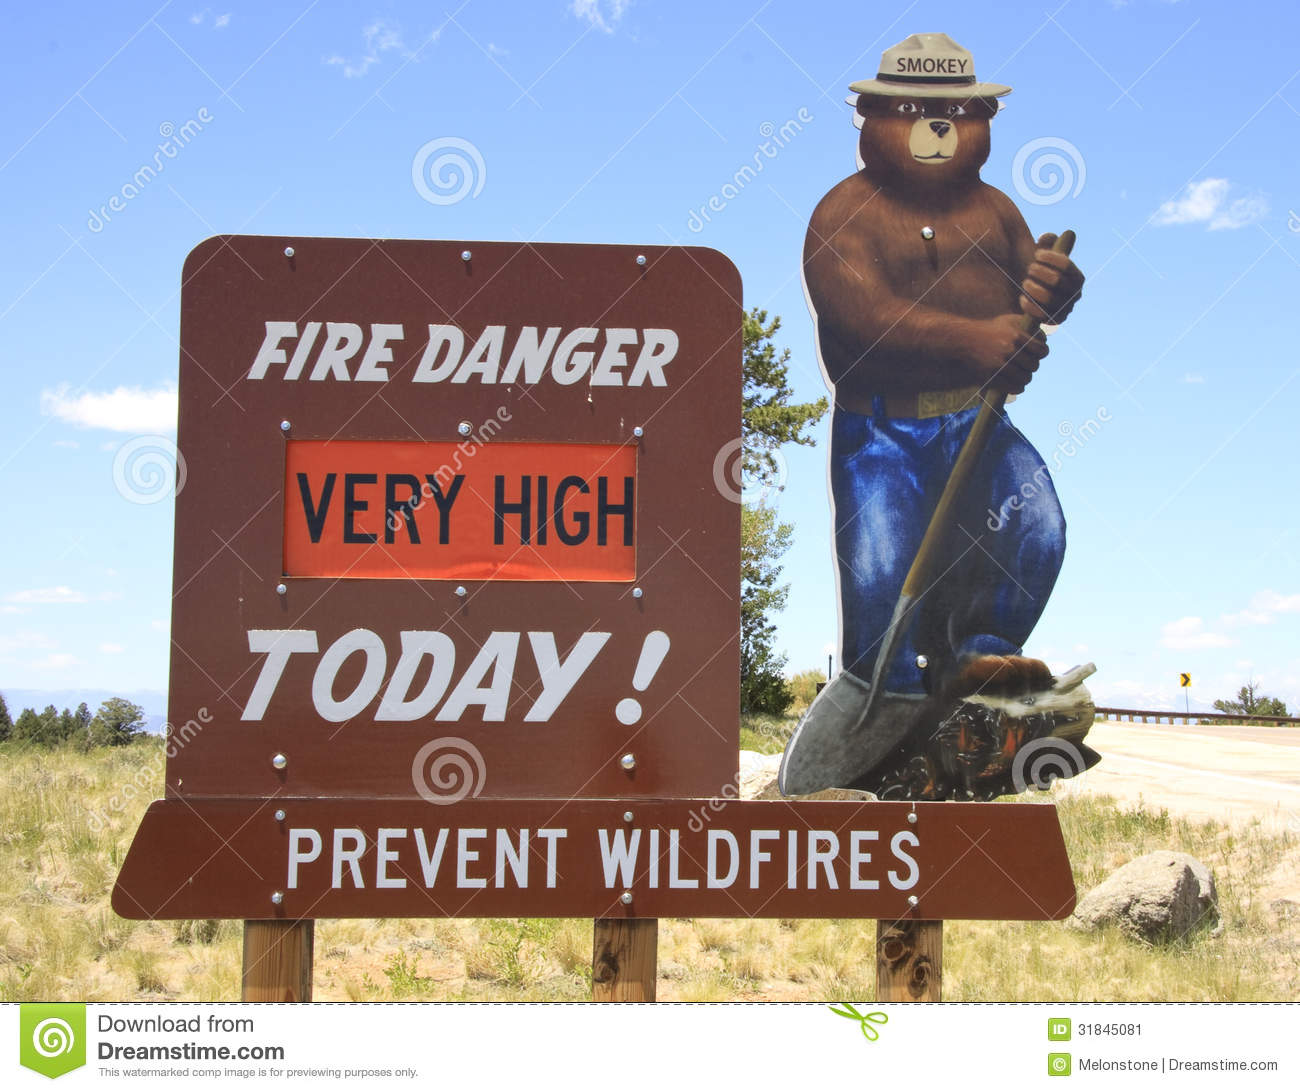 Smokey Bear Fire Sign Stock Image   Image  31845081